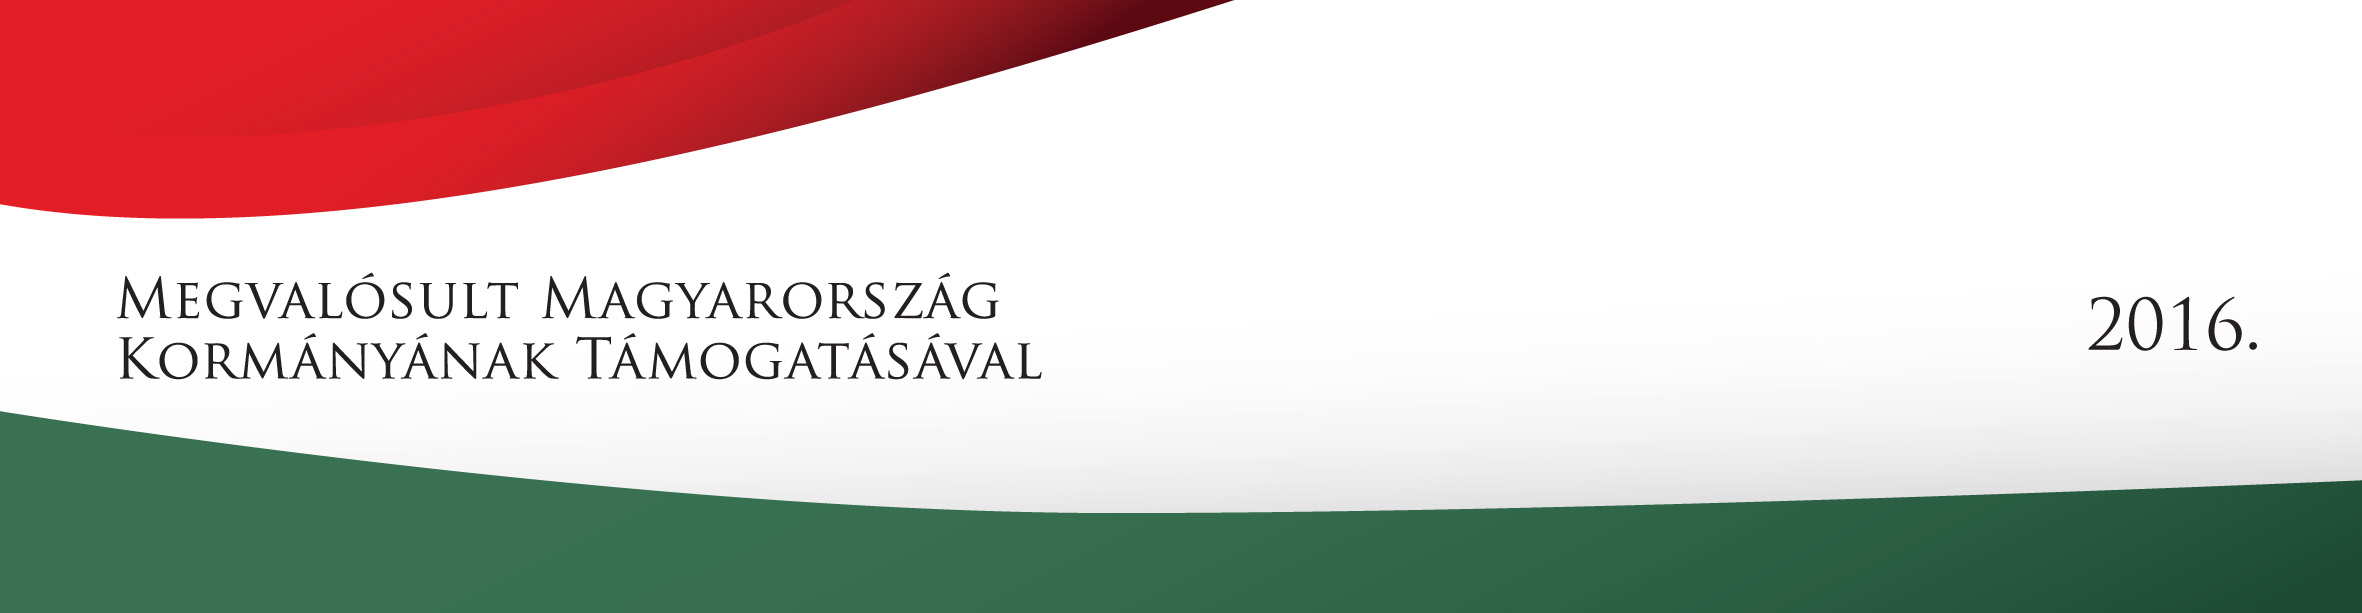 banner/megvalosult-magyarorszag-kormanyanak-tamogatasaval-2016.jpg